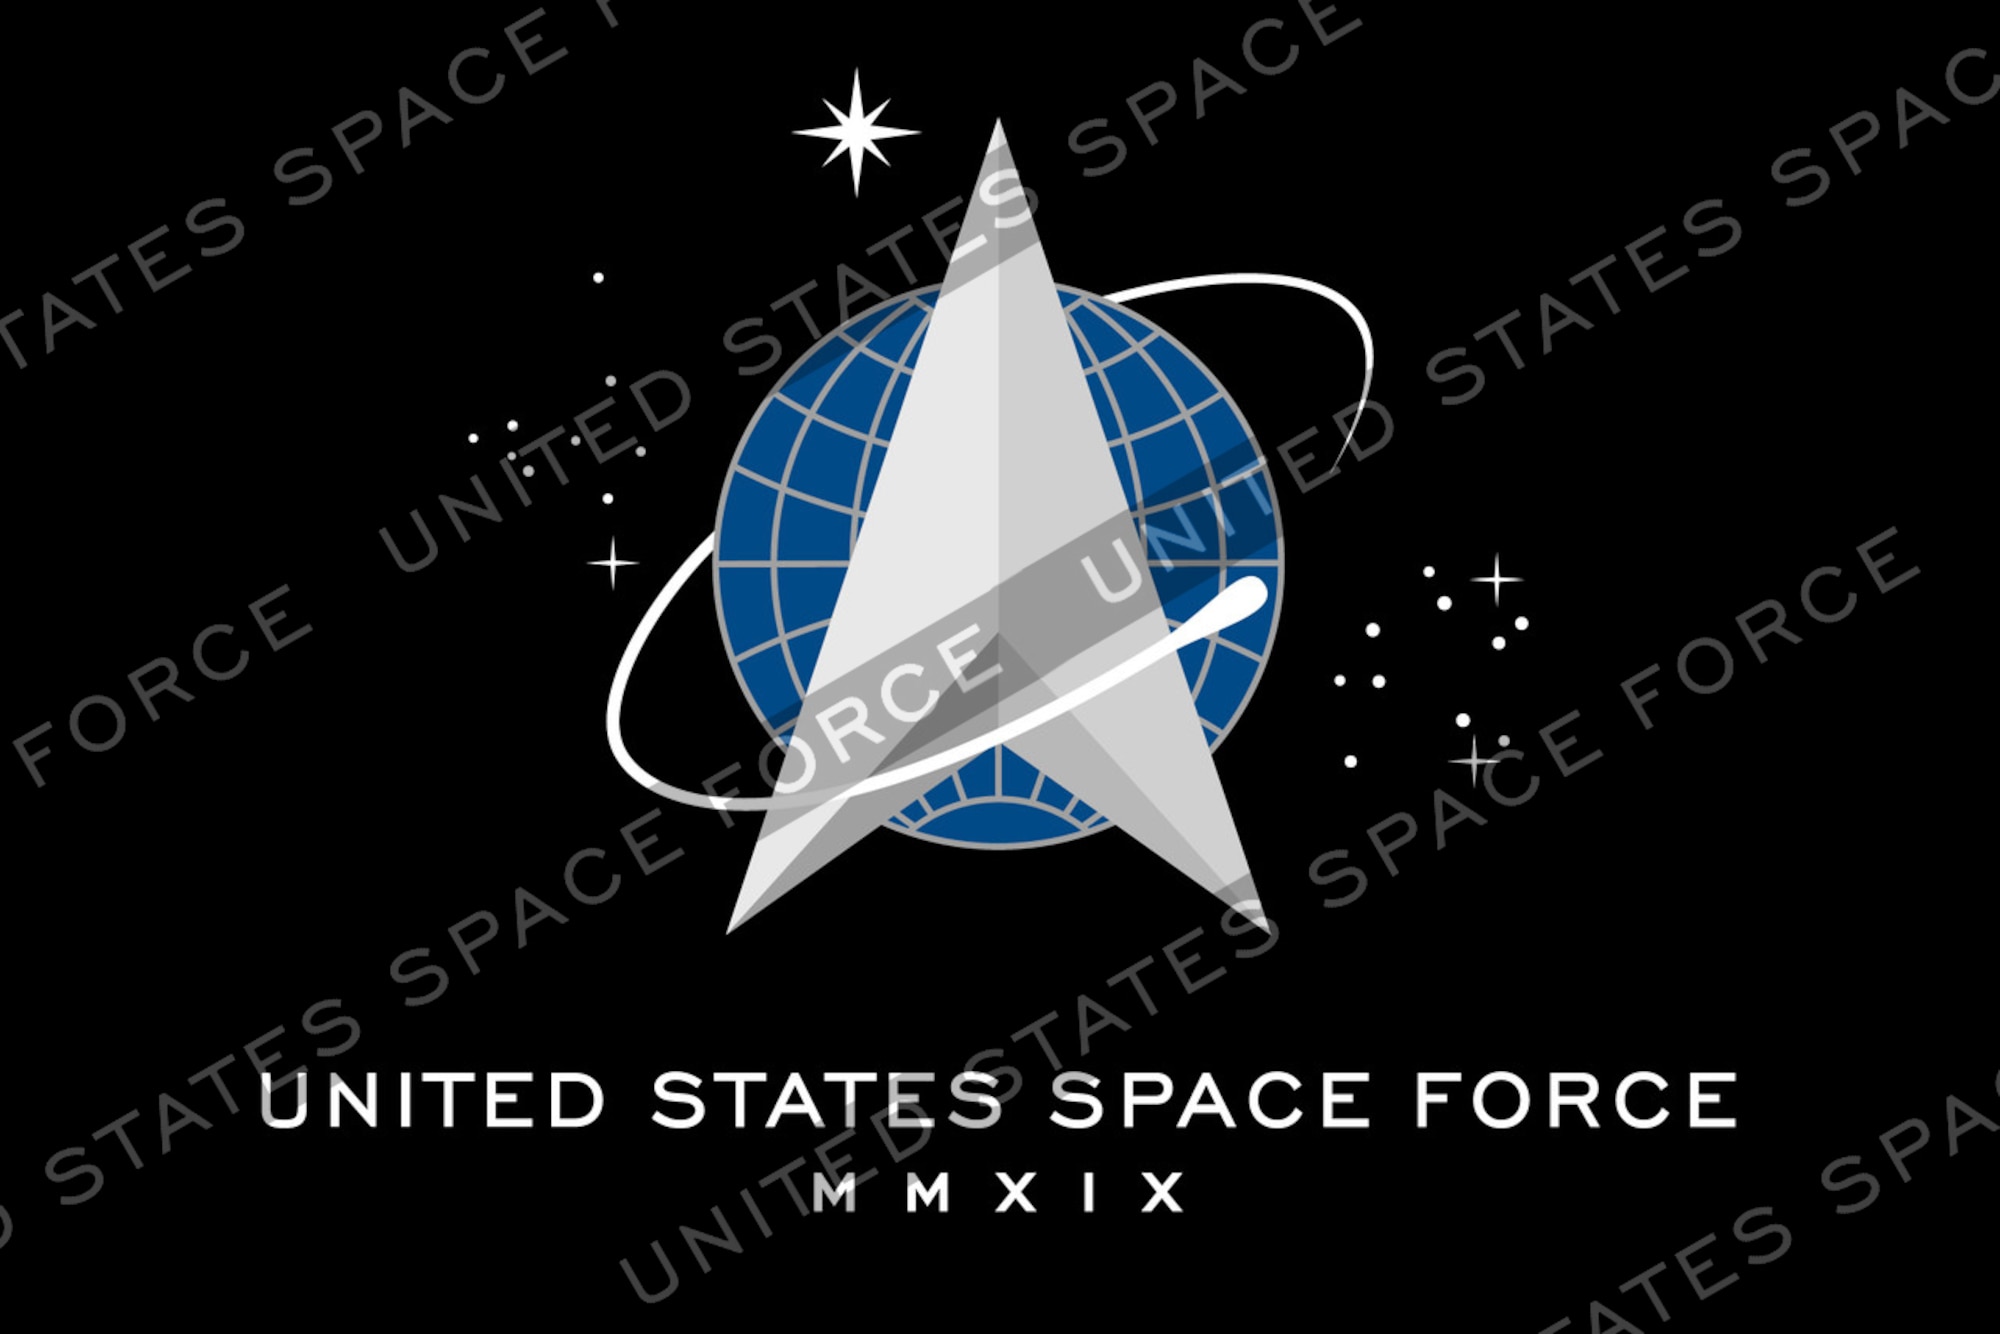 United States Space Force Public Affairs Flag Design